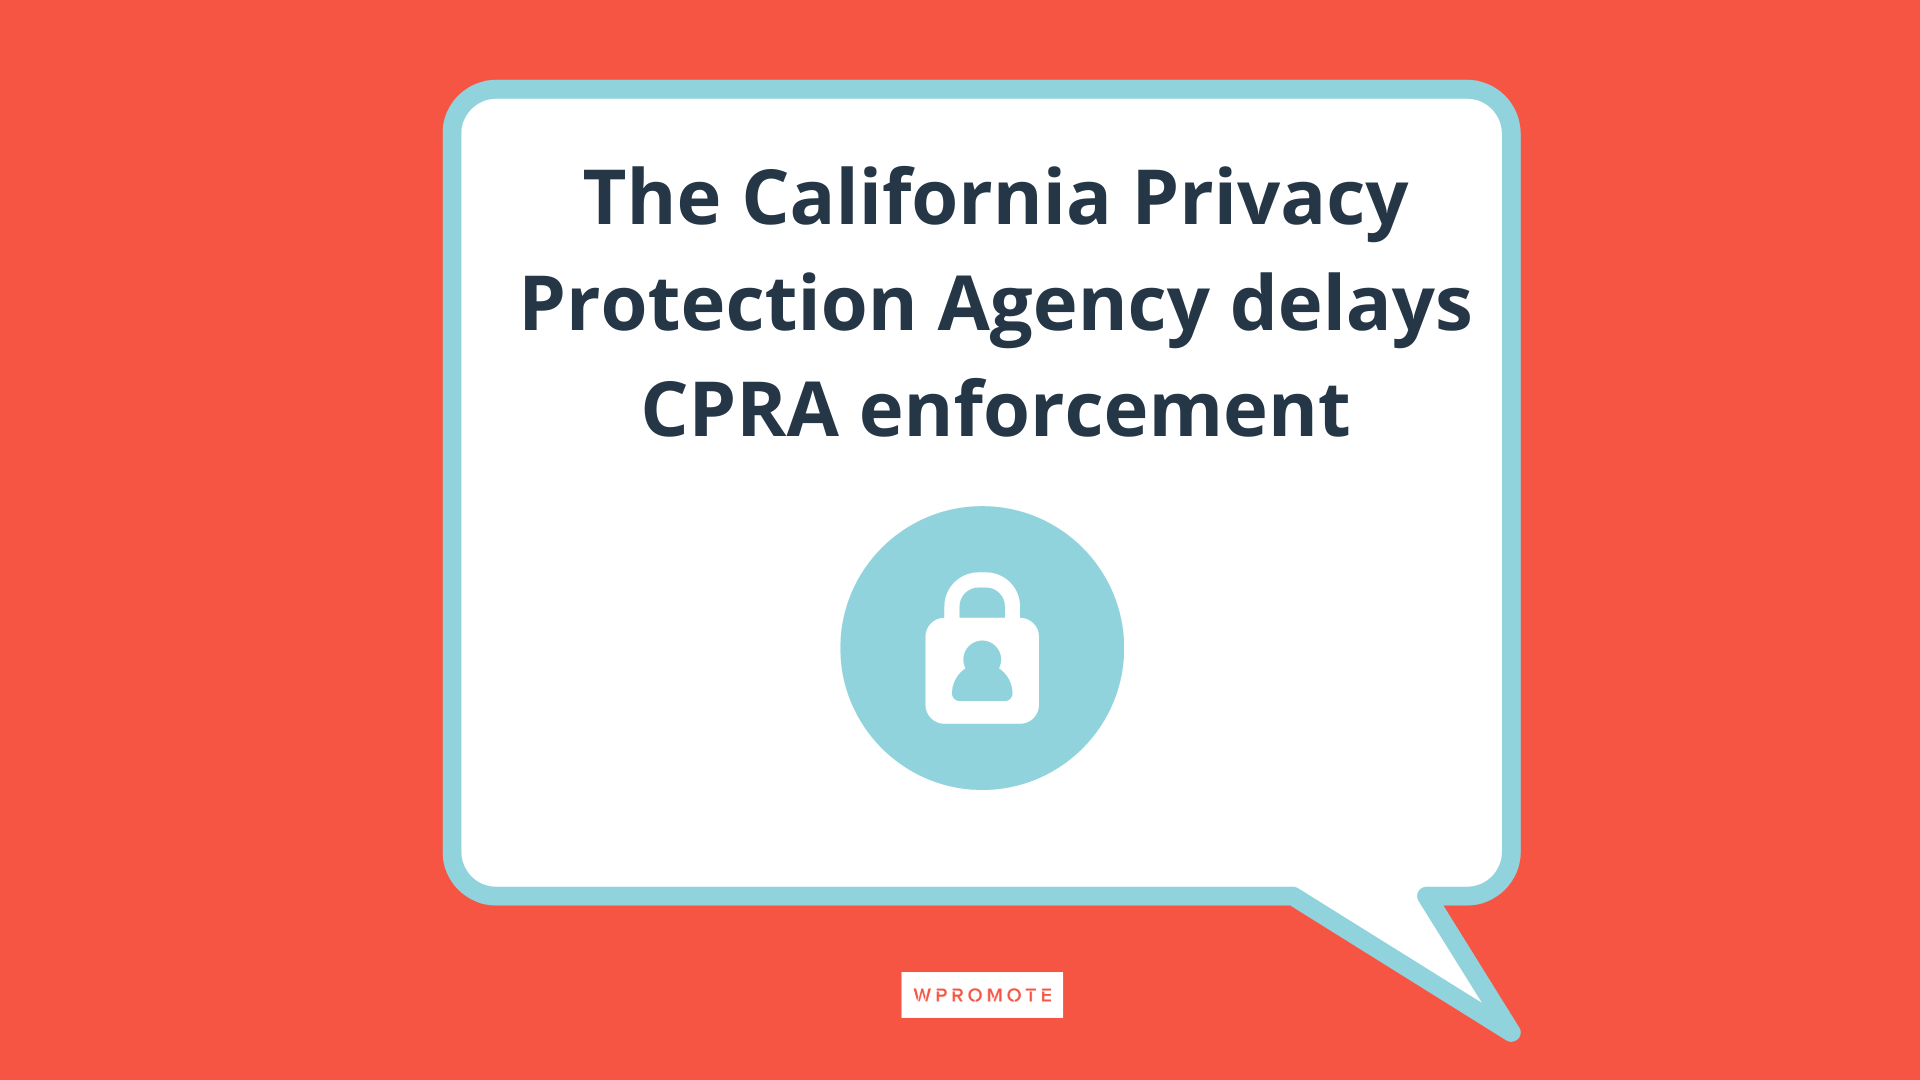 California Privacy Protection Agency delays CPRA enforcement in speech bubble